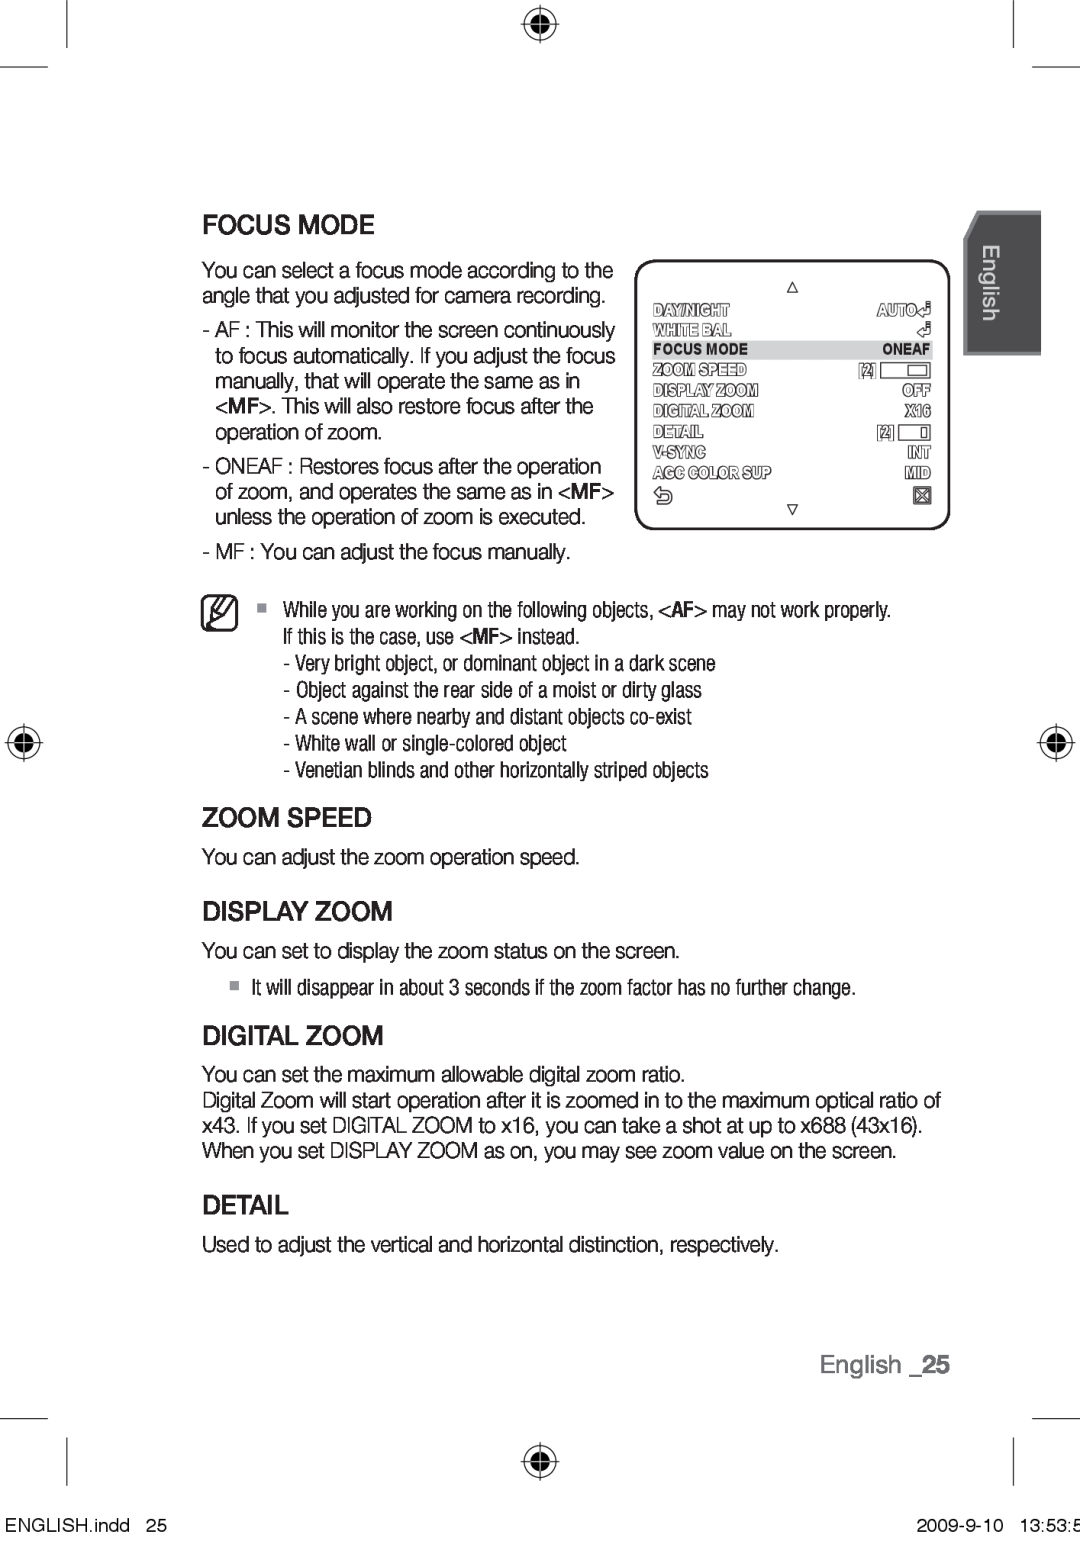 Samsung SCC-C4355P, SCC-C4353P Focus Mode, Zoom Speed, Display Zoom, Digital Zoom, Detail, English, operation of zoom 